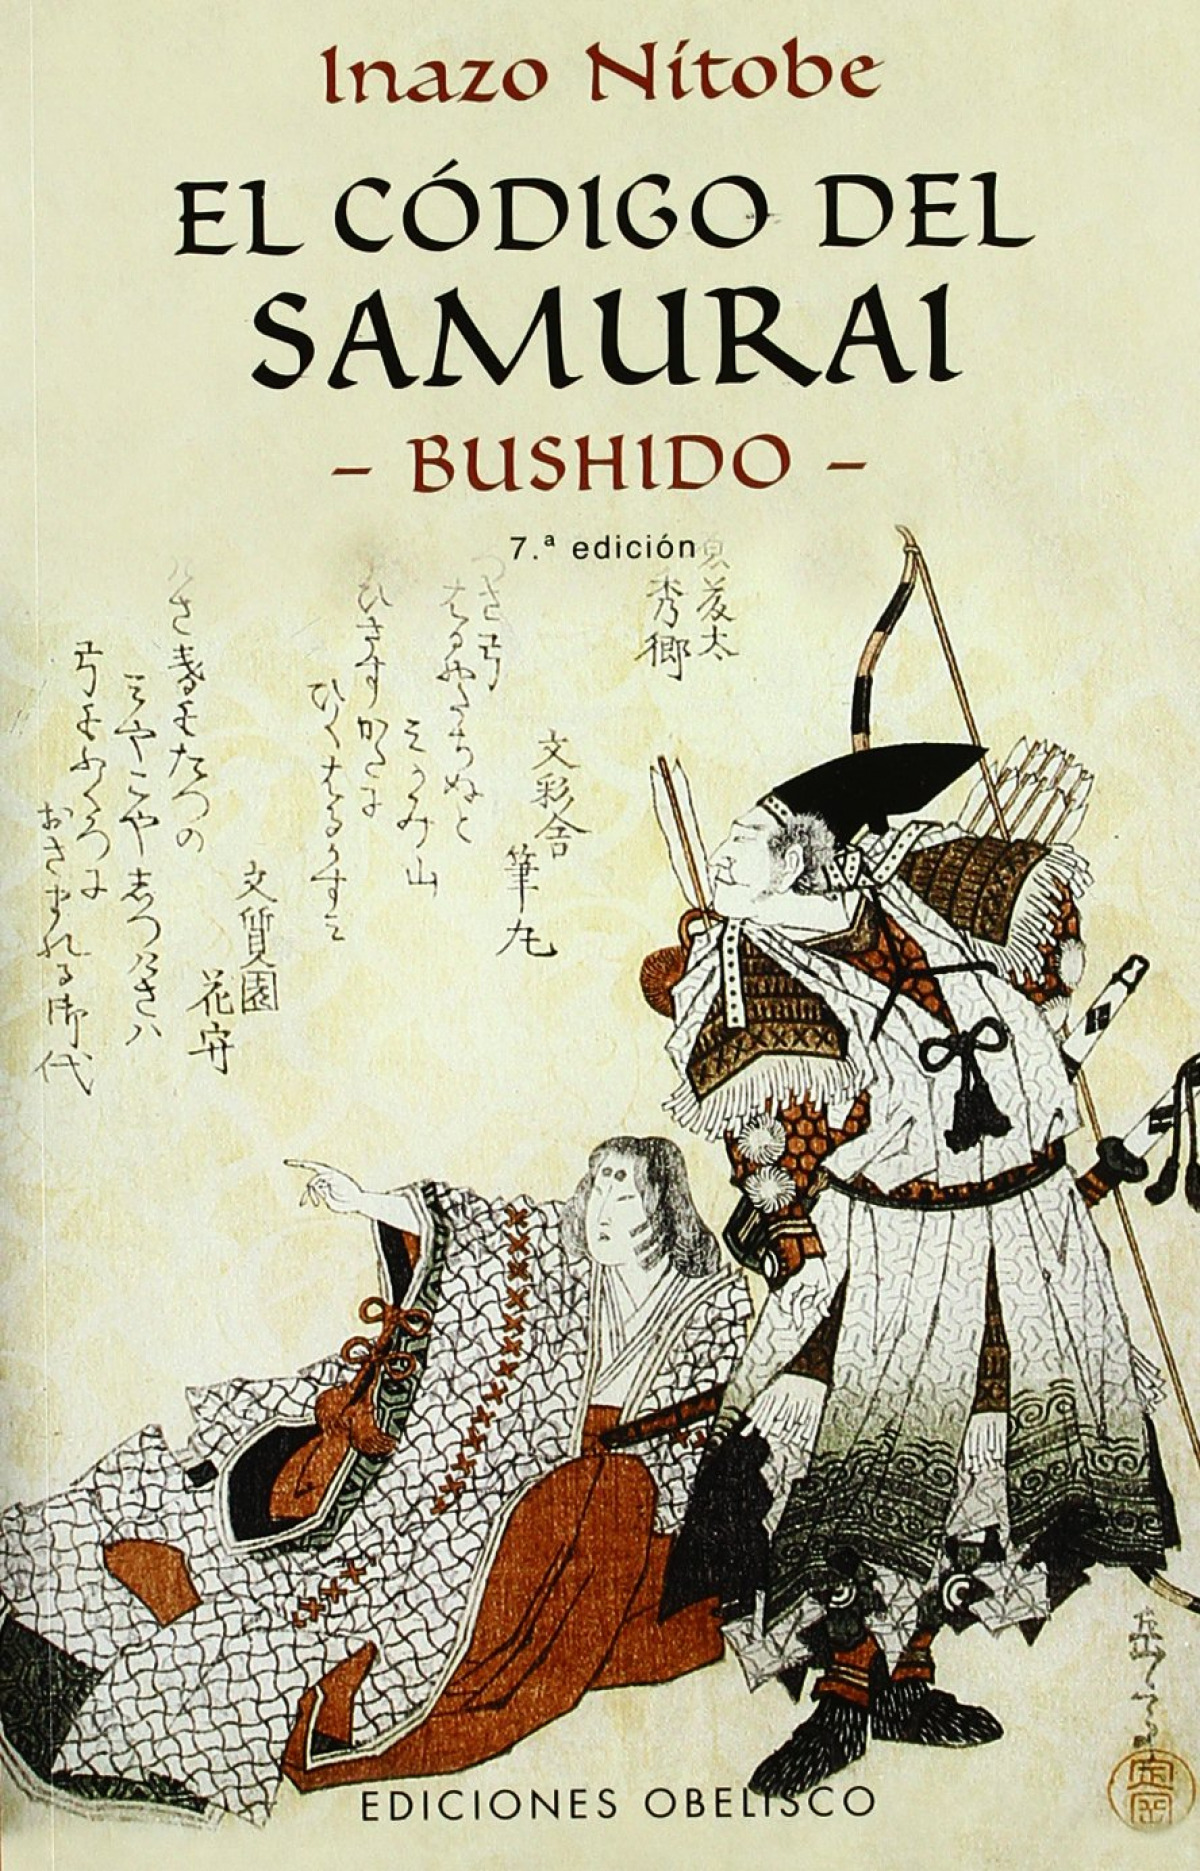 Codigo del samurai,el -bushido- - Nitobe, Inazo